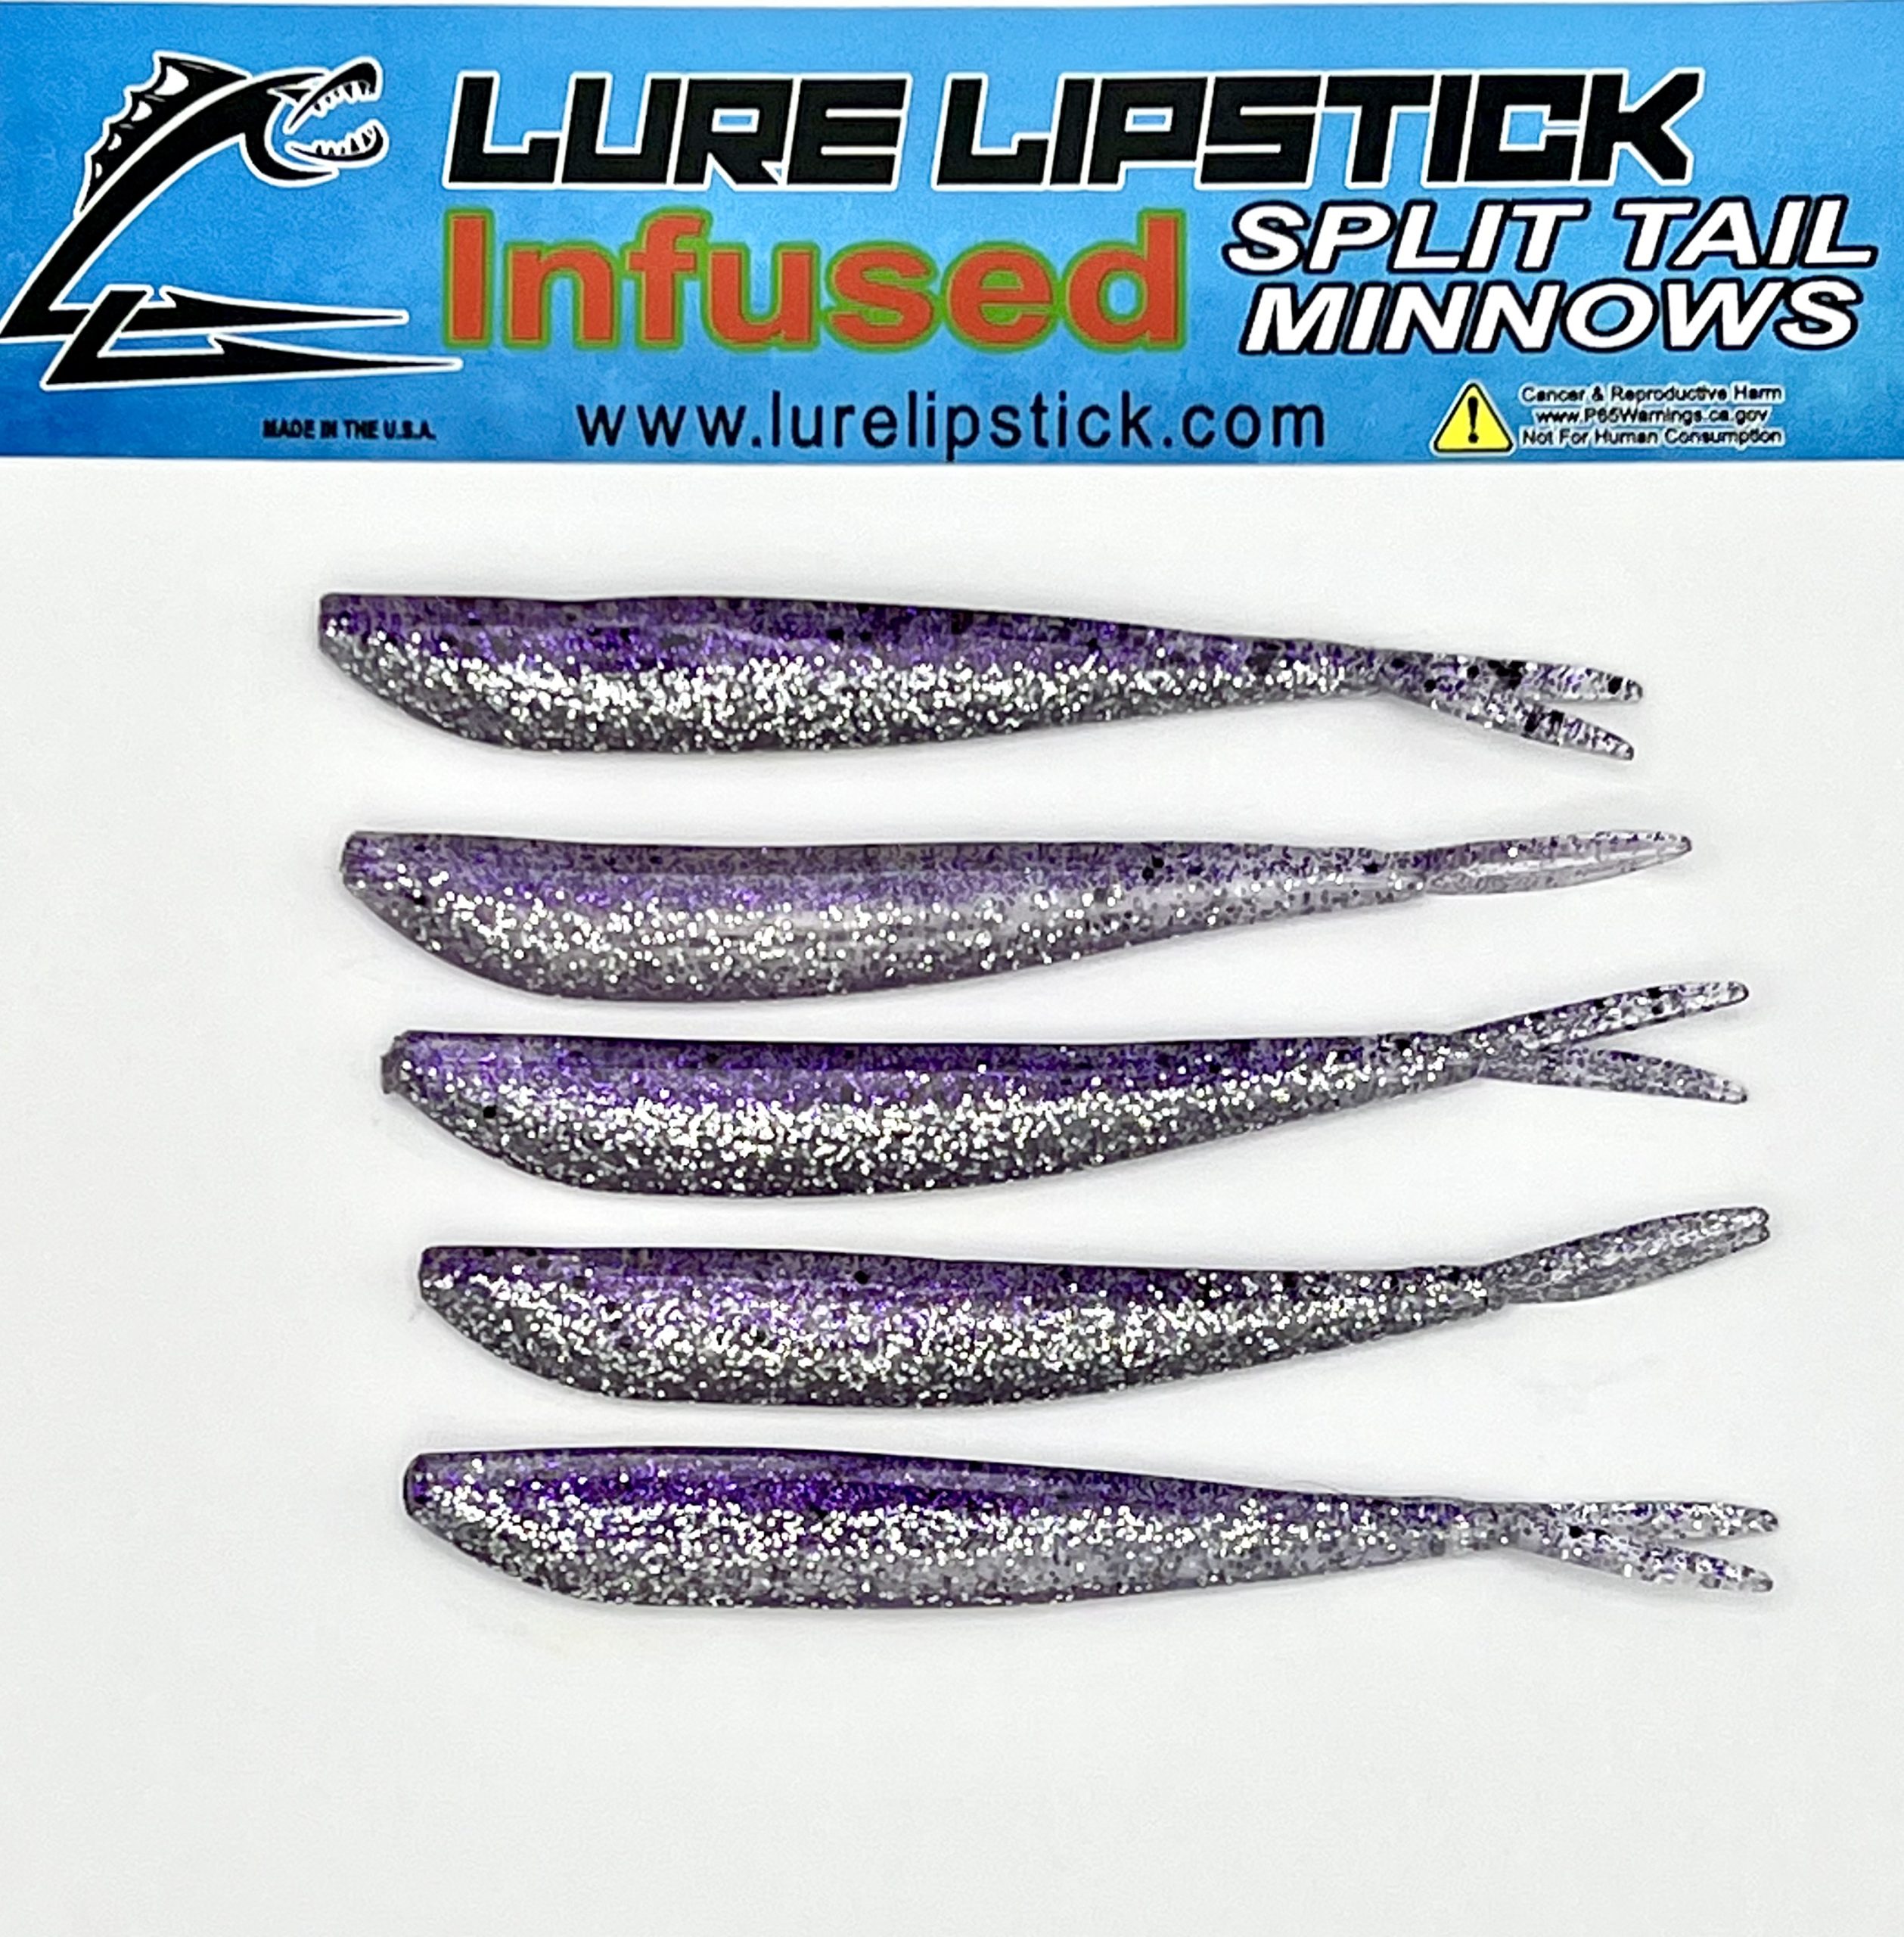 4in 5 Pack Custom Scented Split Tail Minnows - Purple Ice